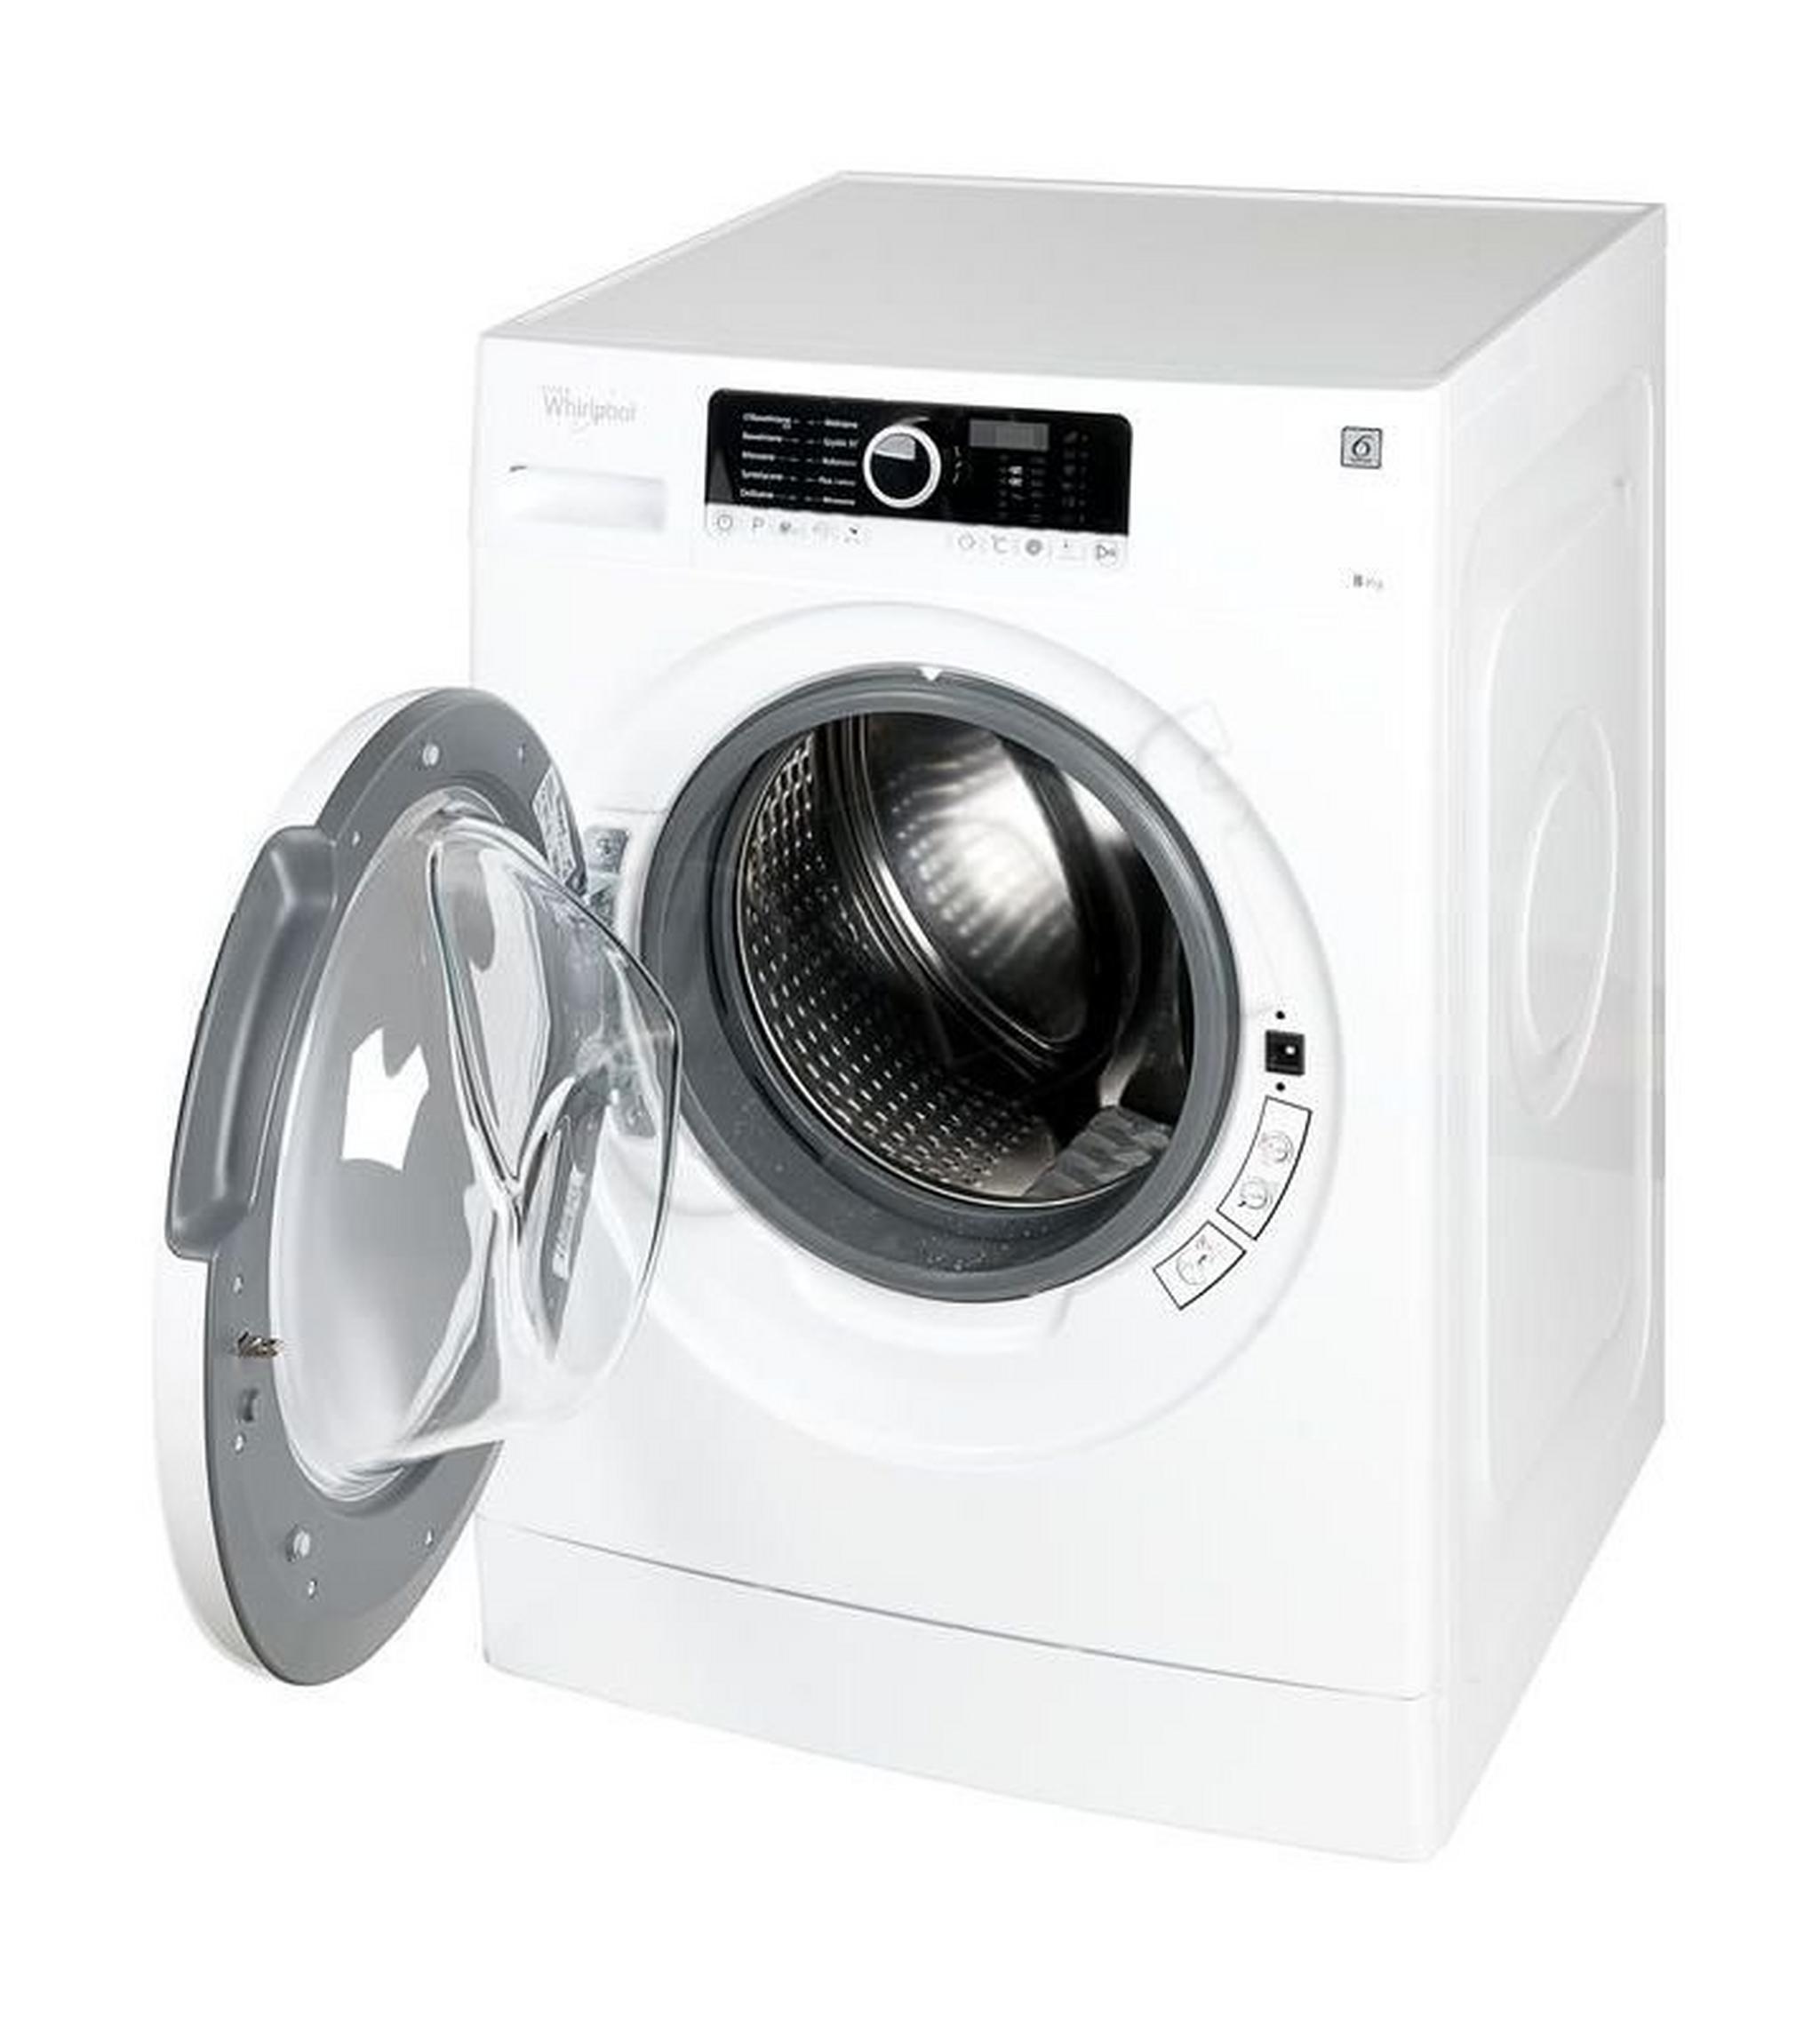 Whirlpool 8KG Front Load Washing Machine (FSCR80211) – White